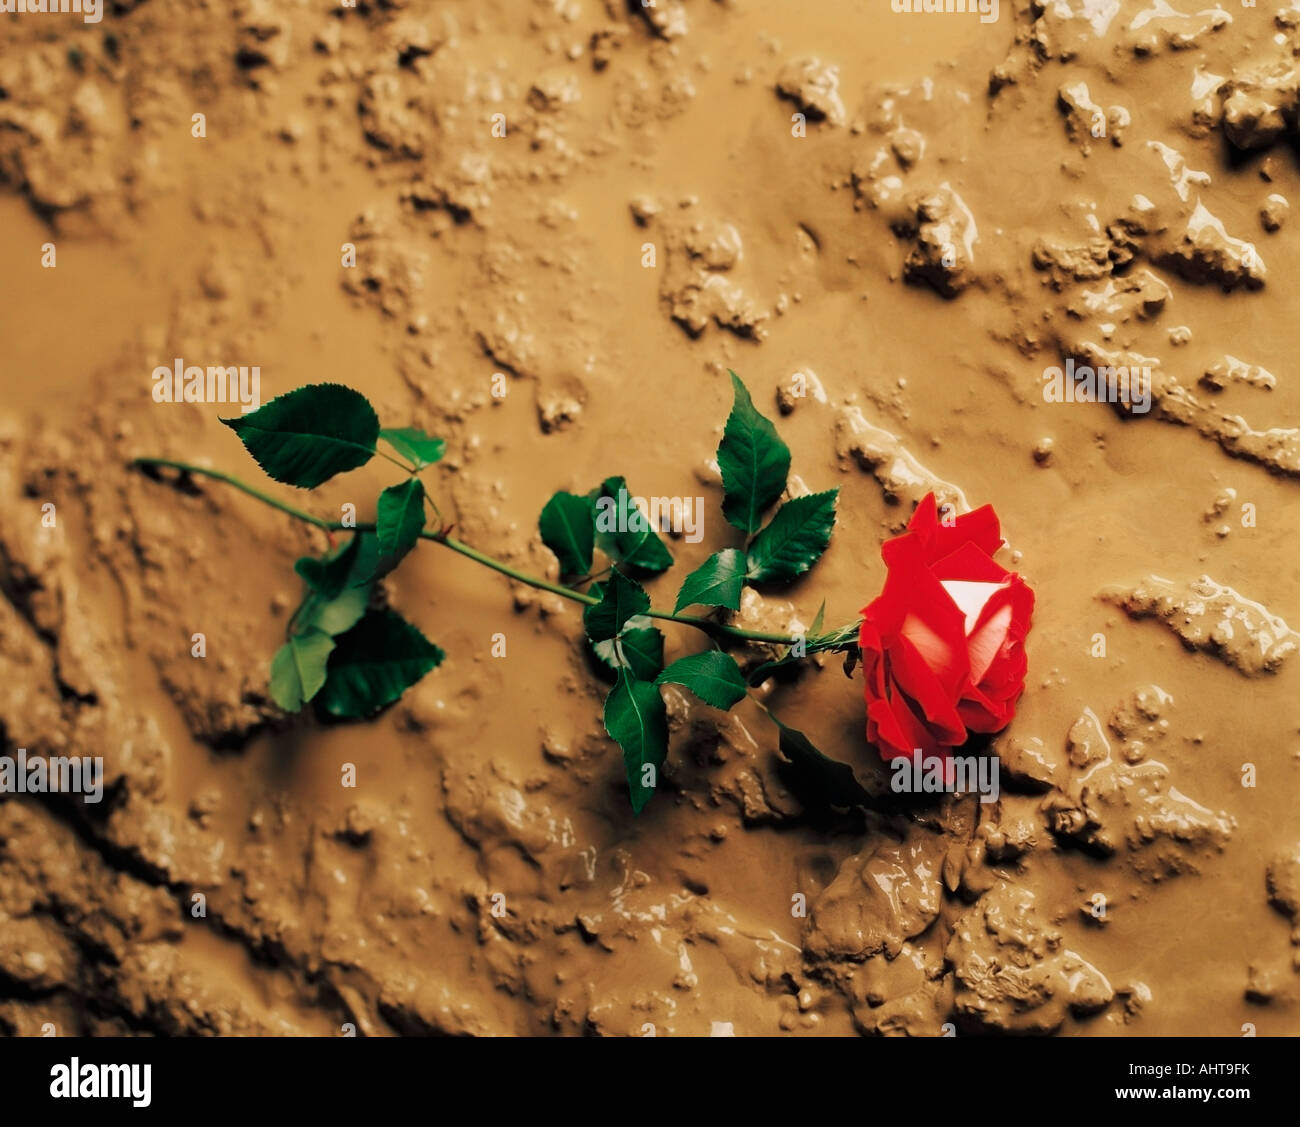 Red rose on the muddy ground Stock Photo